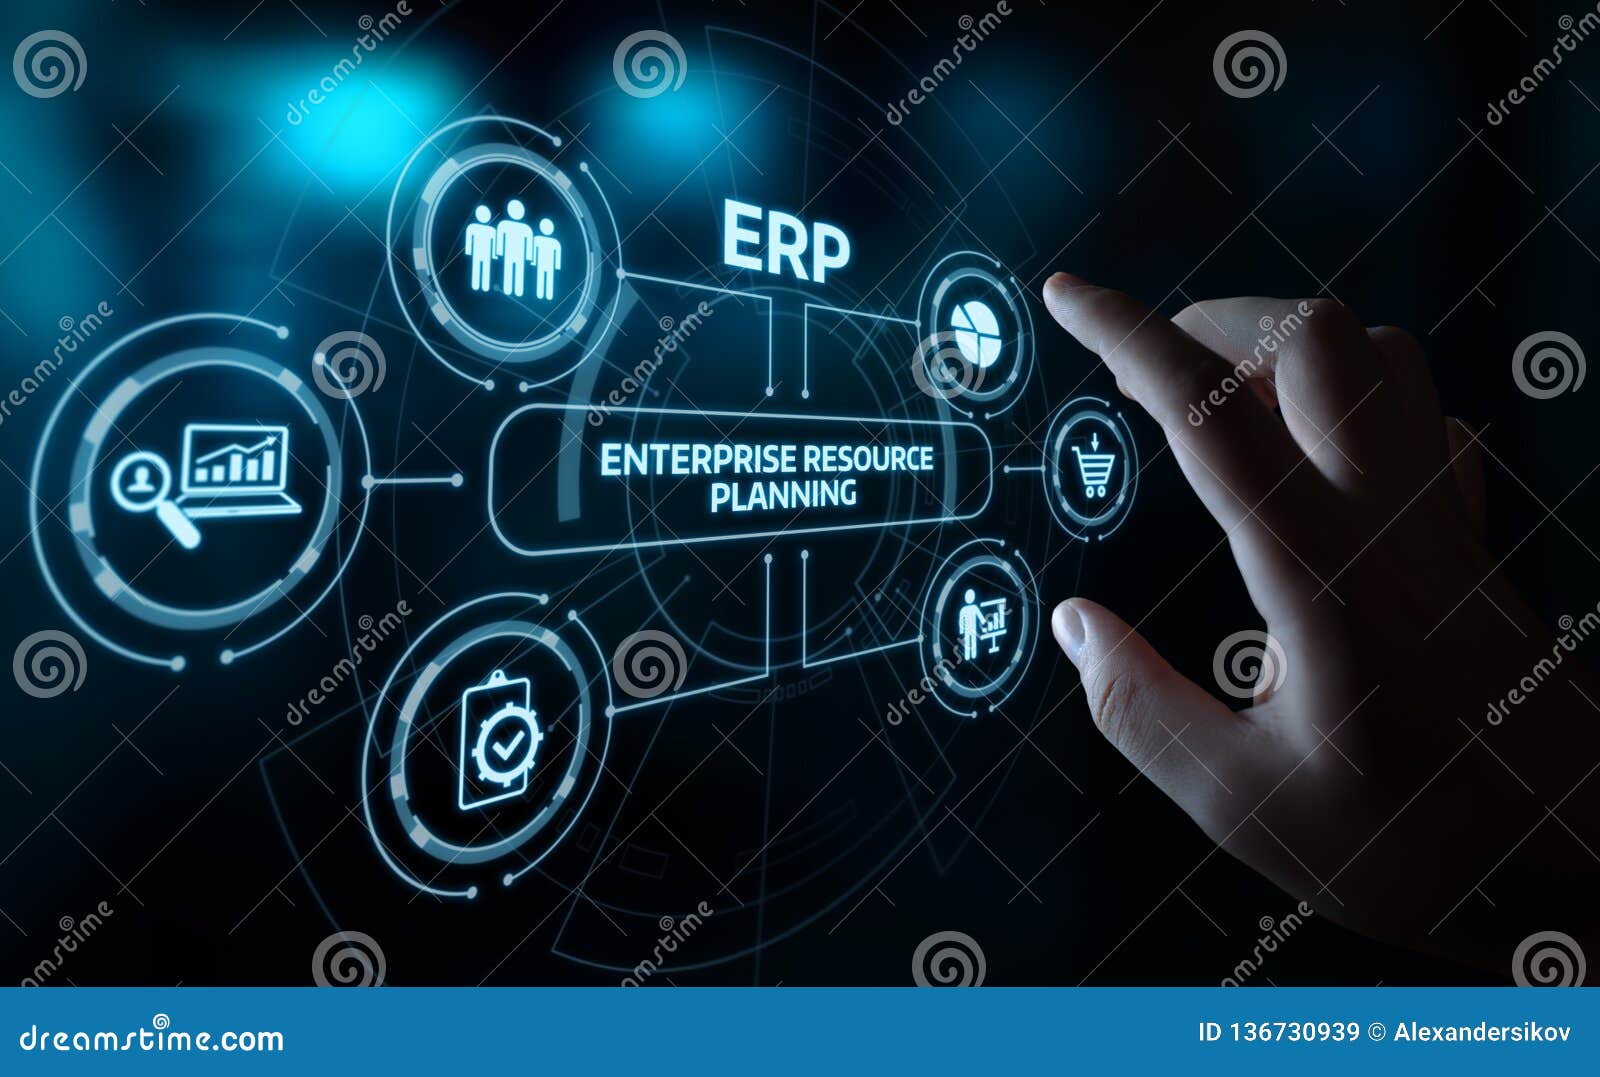 enterprise resource planning erp corporate company management business internet technology concept